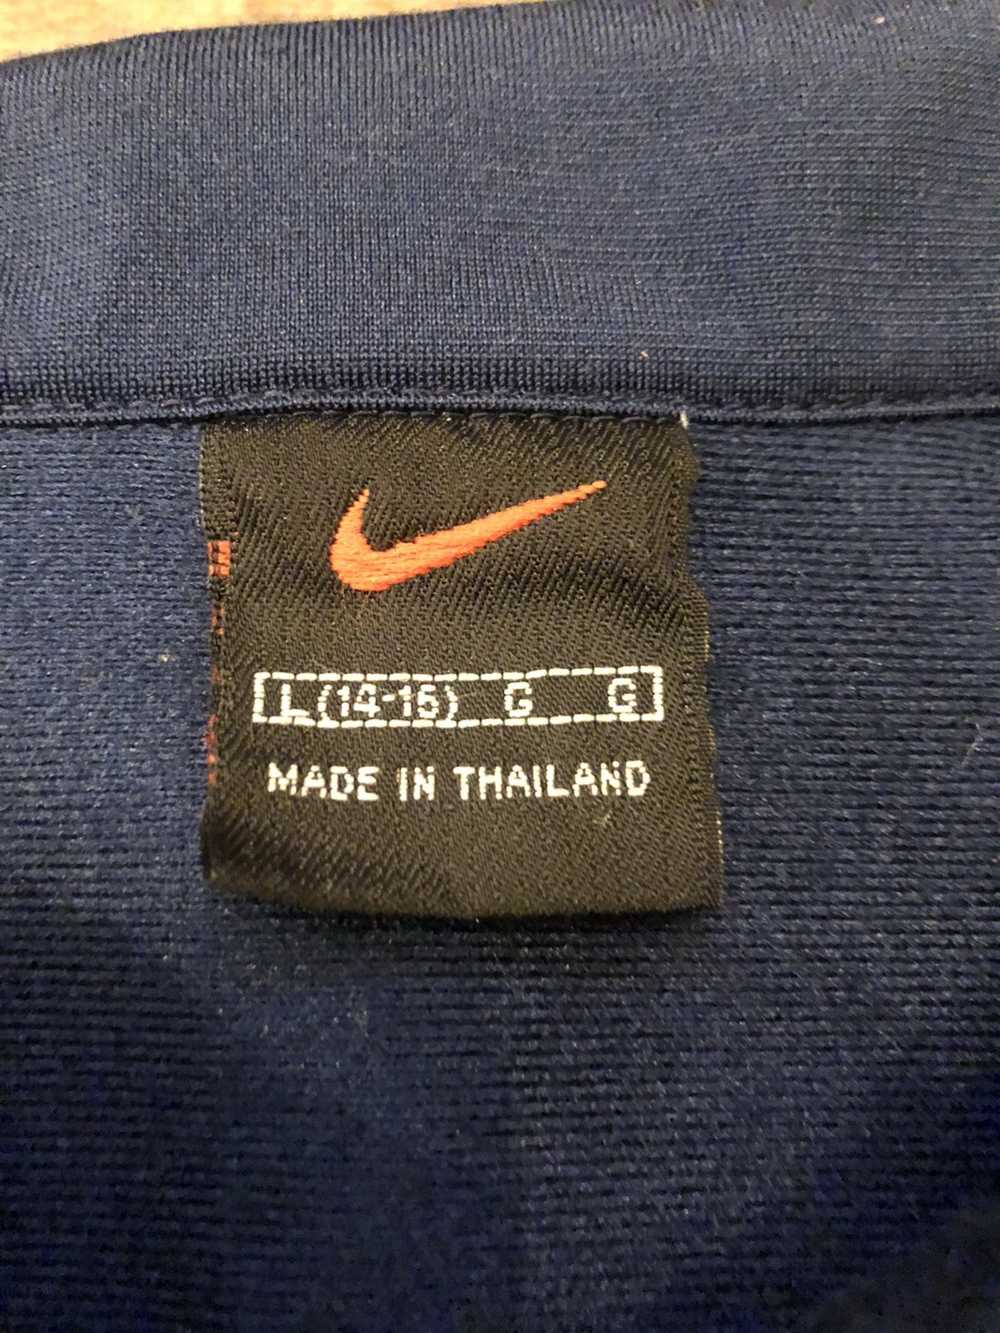 Nike Nike shirt - image 4